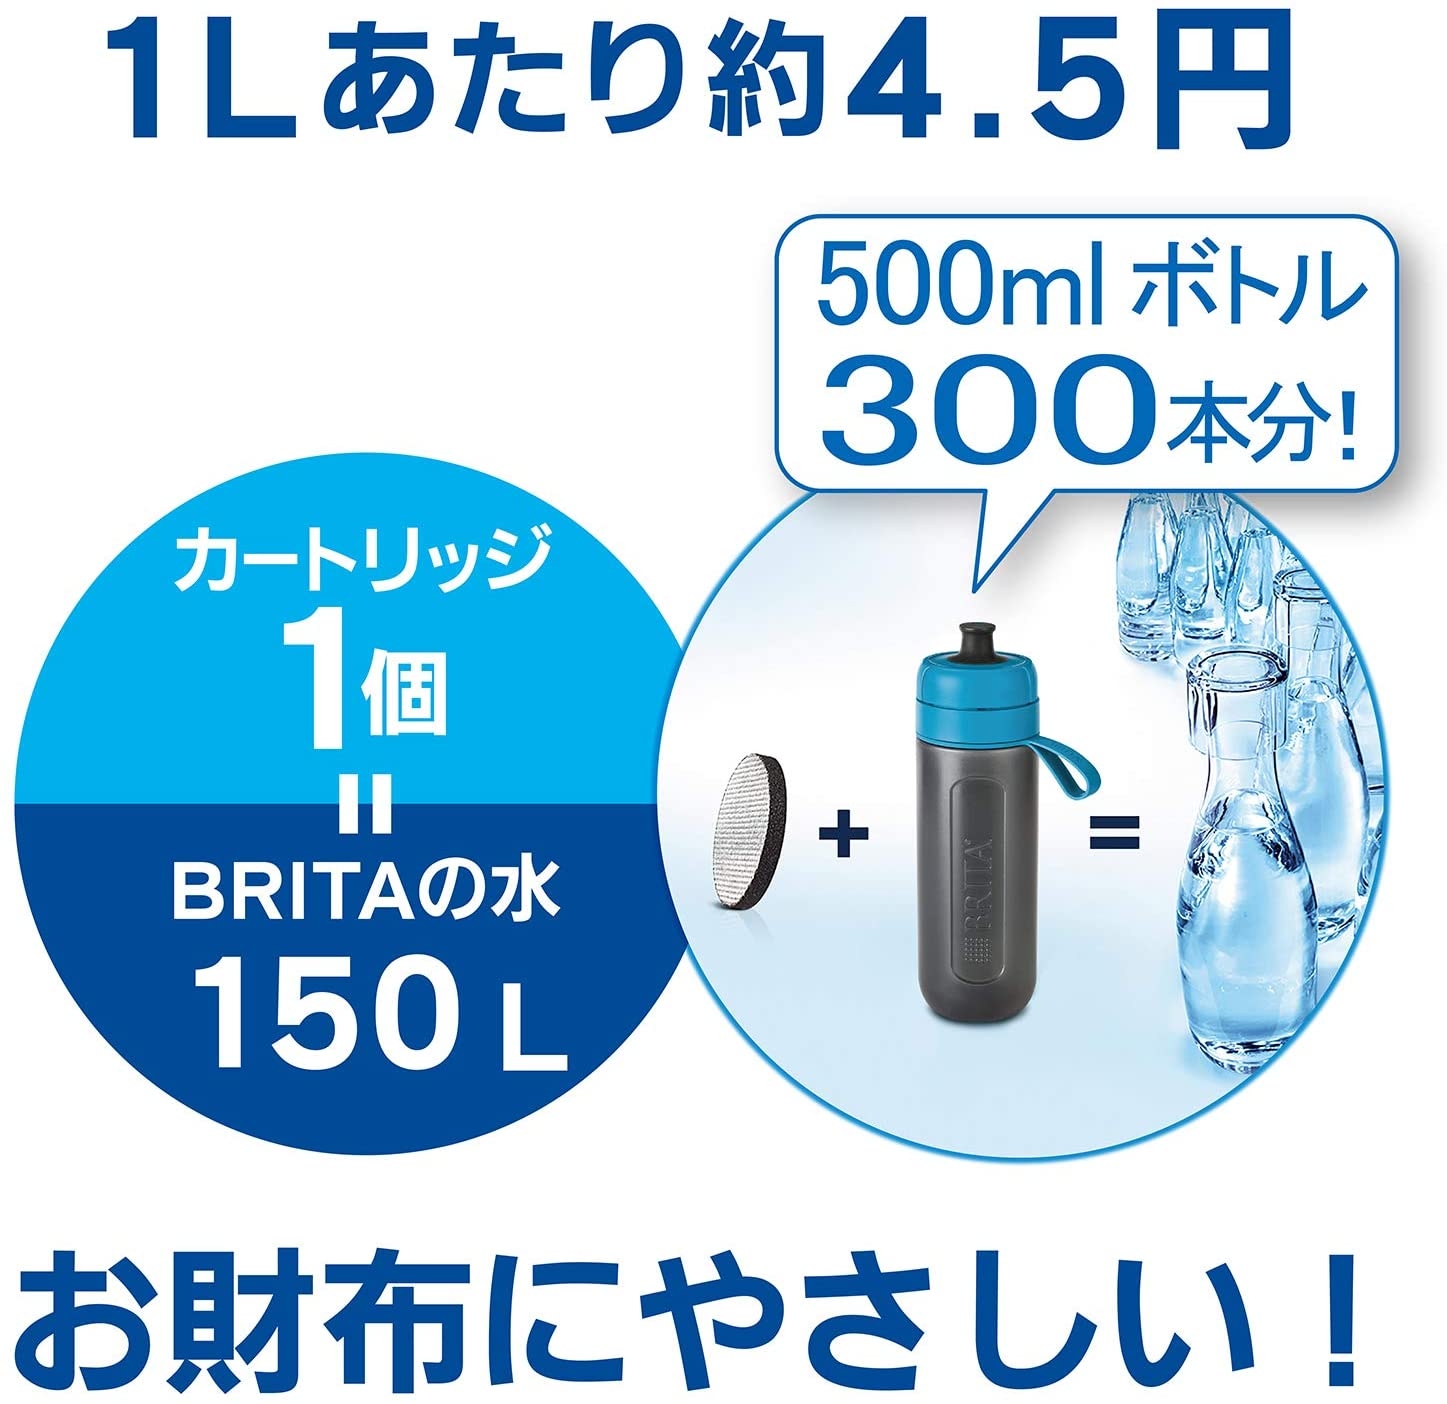 BRITA(ブリタ) ボトル型浄水器アクティブの商品画像4 